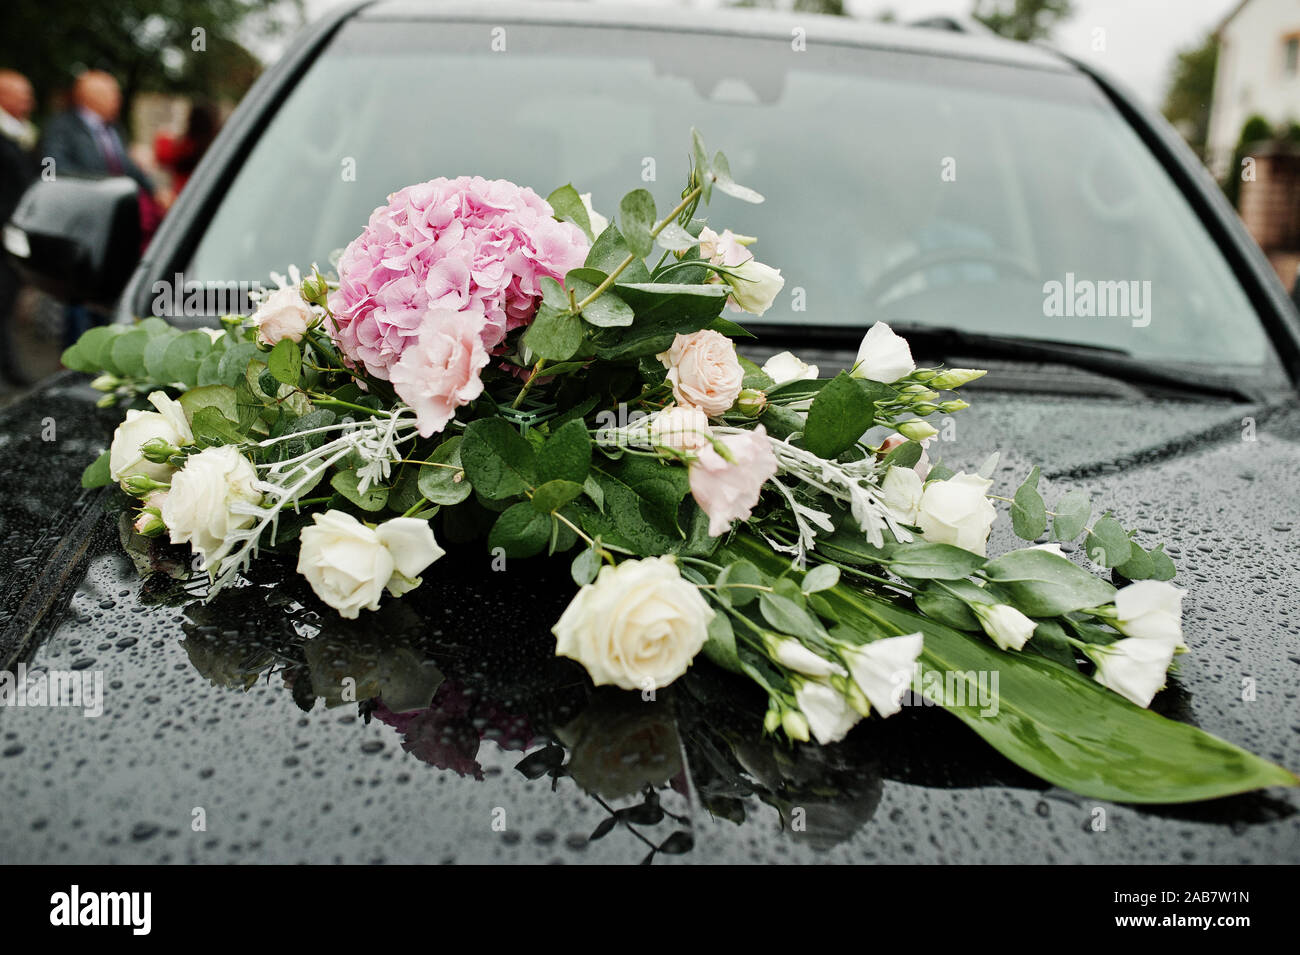 Paine Gillic bedriegen Slordig Elegance wedding limousine car with floral decoration Stock Photo - Alamy